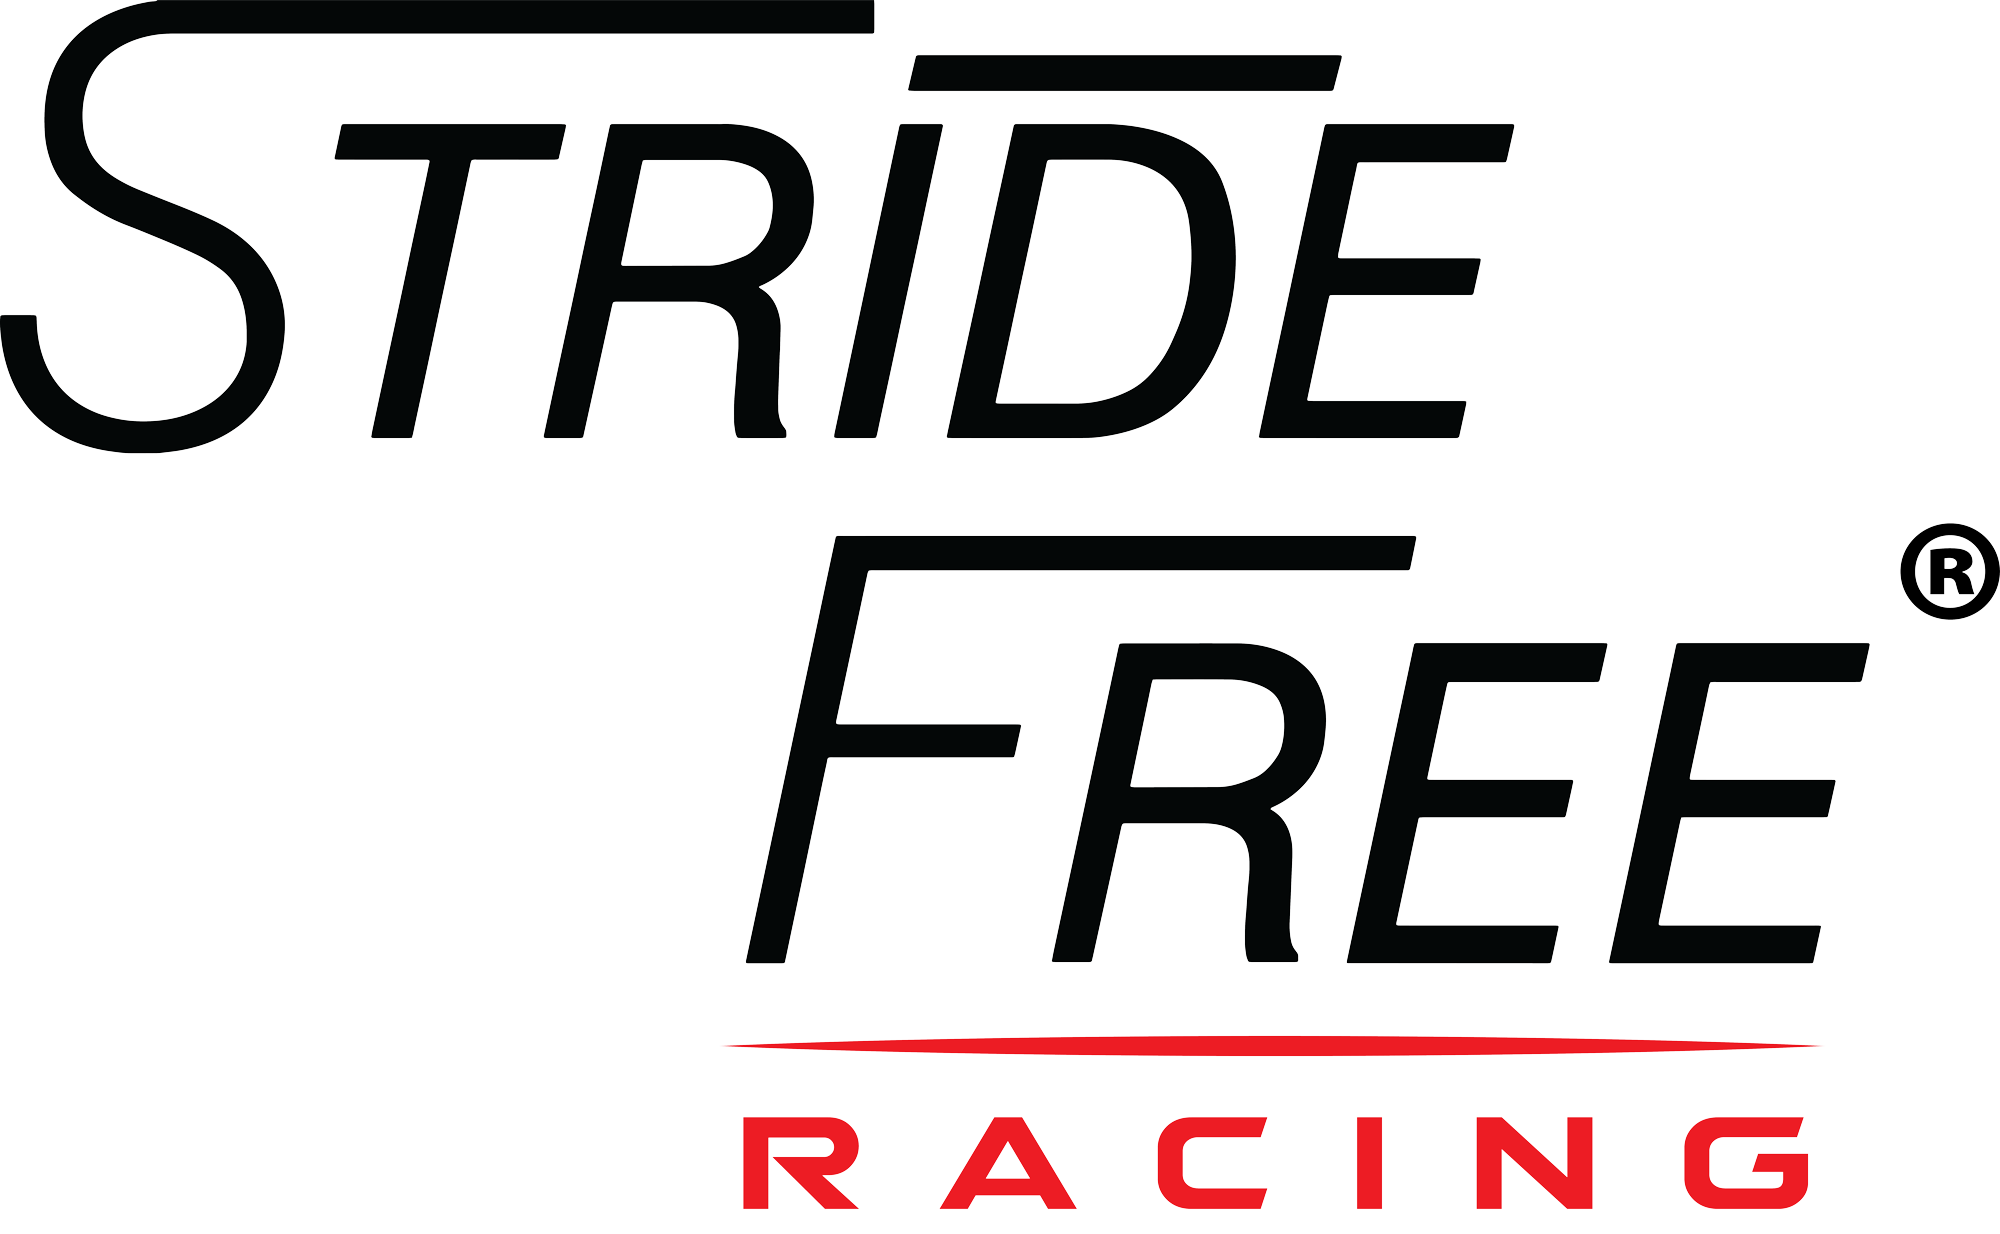 NEW-Stride Free-Racing-logo-BLACK